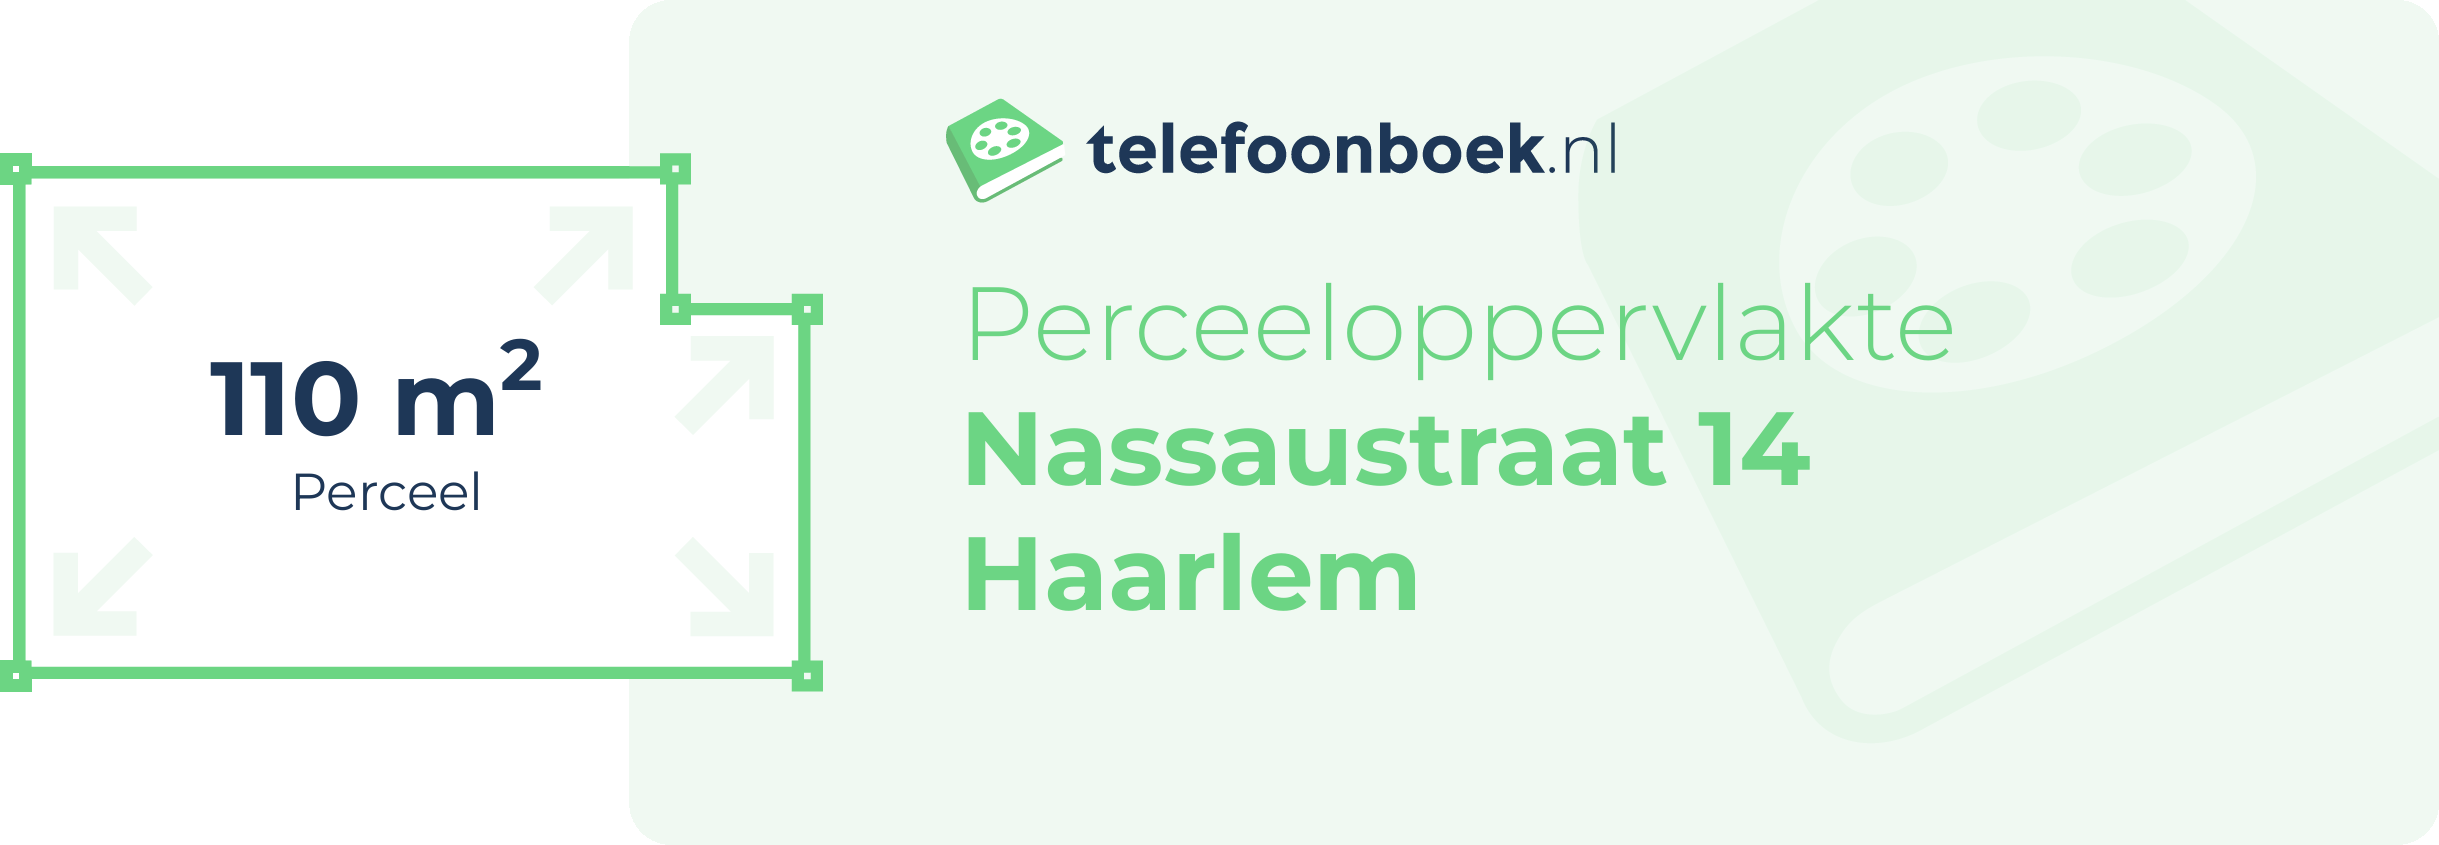 Perceeloppervlakte Nassaustraat 14 Haarlem